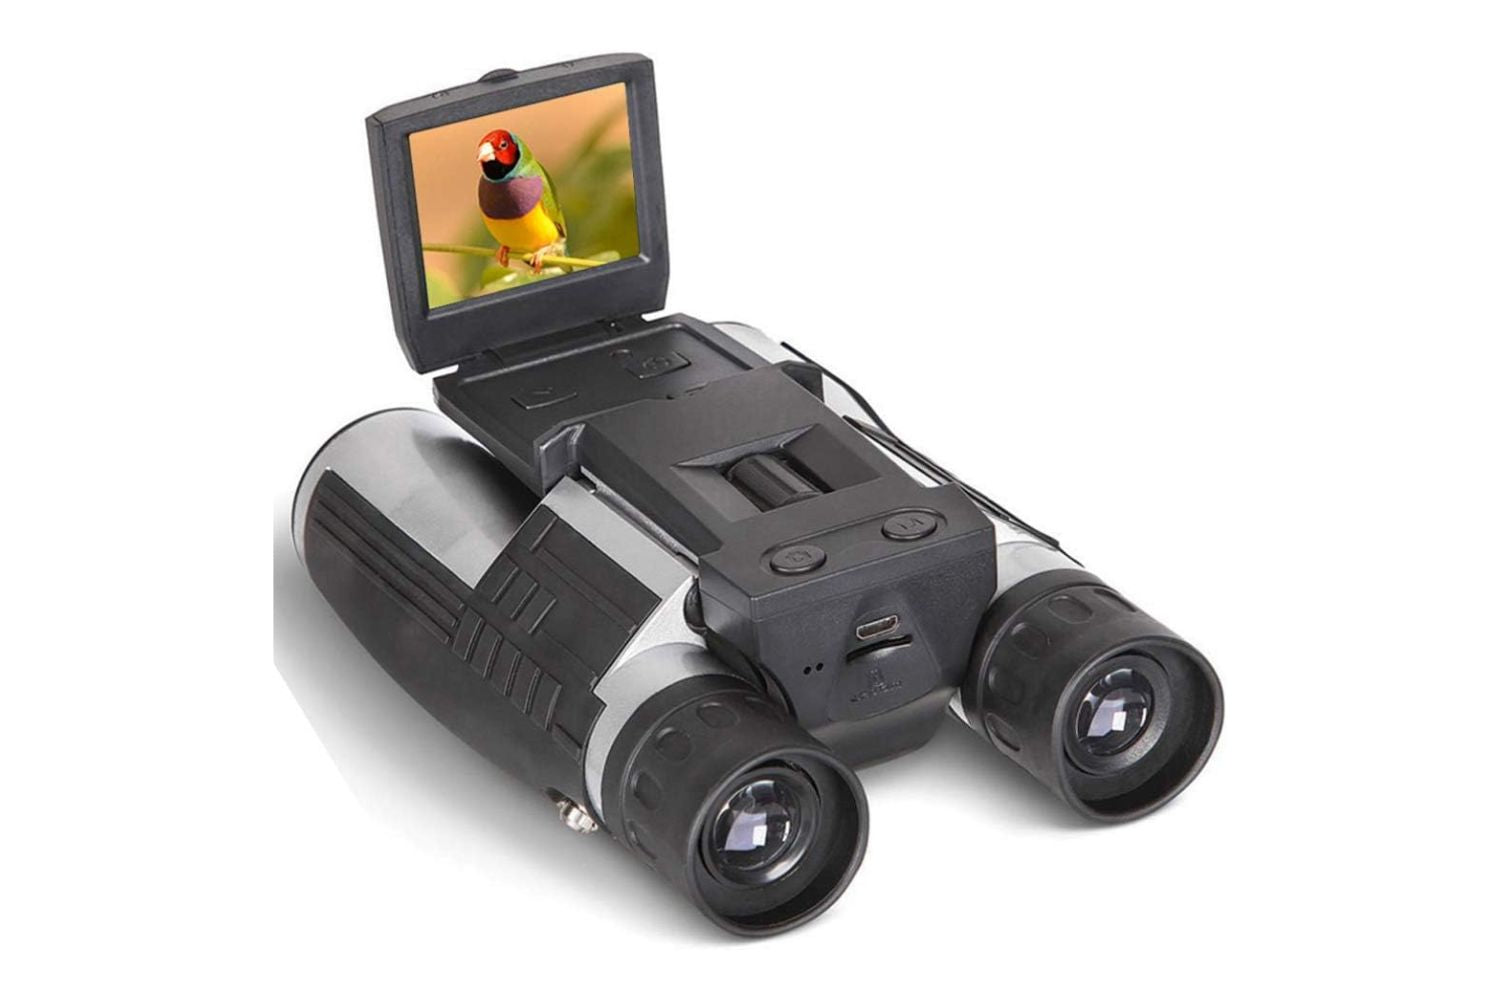 Ansee Digital Binocular with Camera